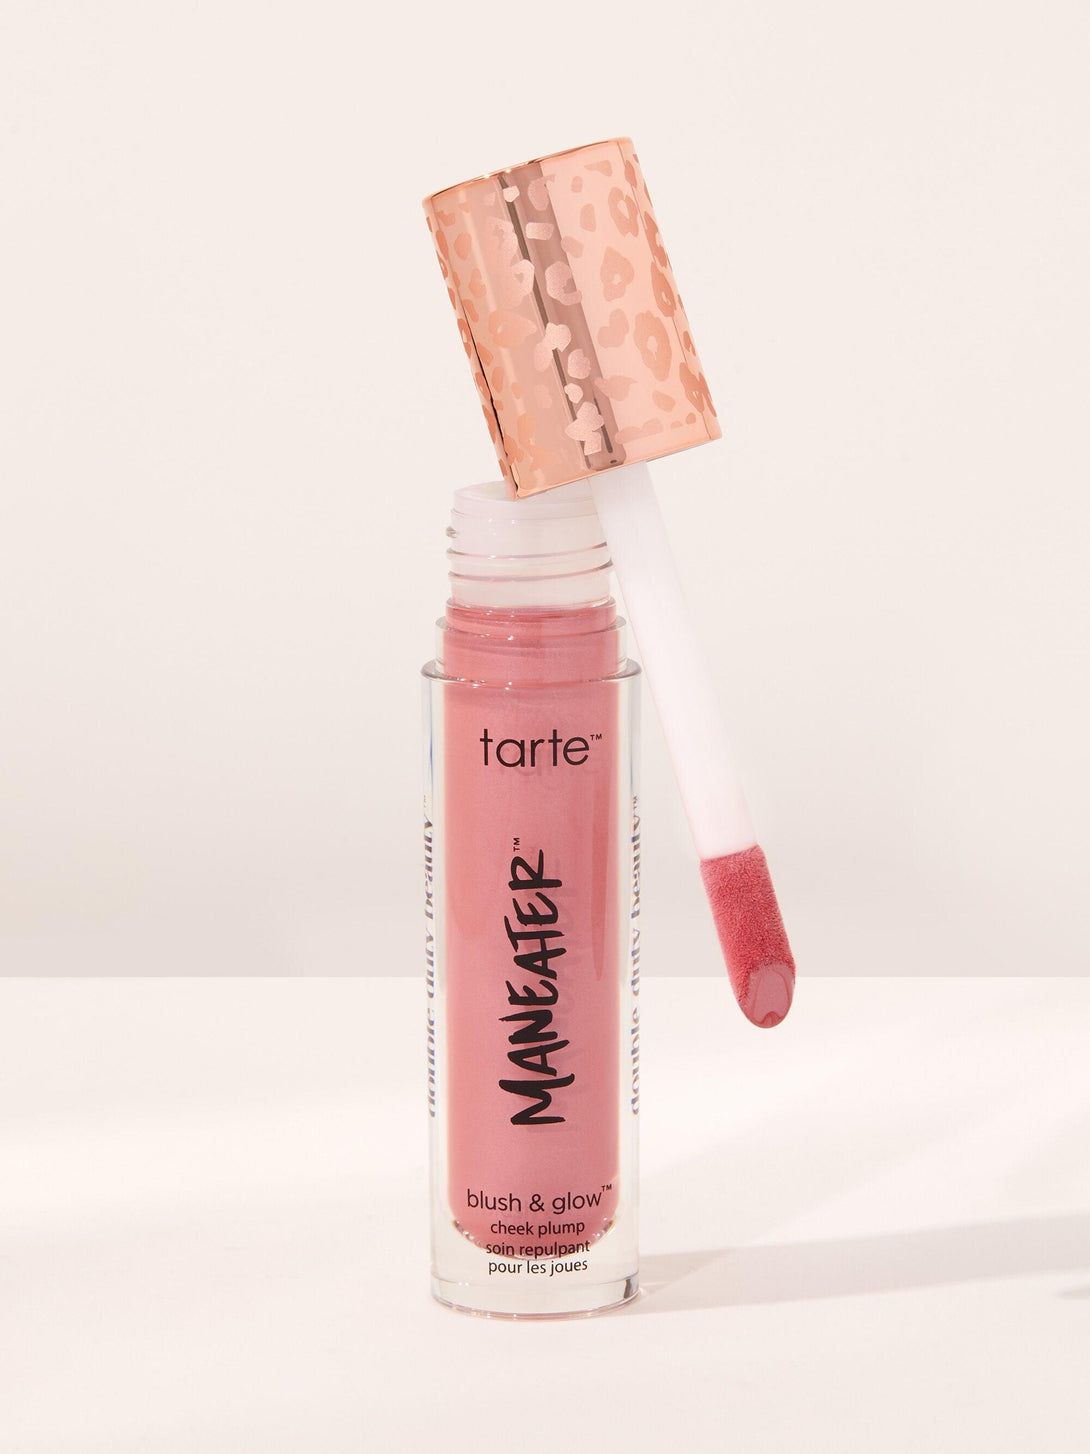 Tarte - maneater blush & glow cheek plump - Cosmetic Holic